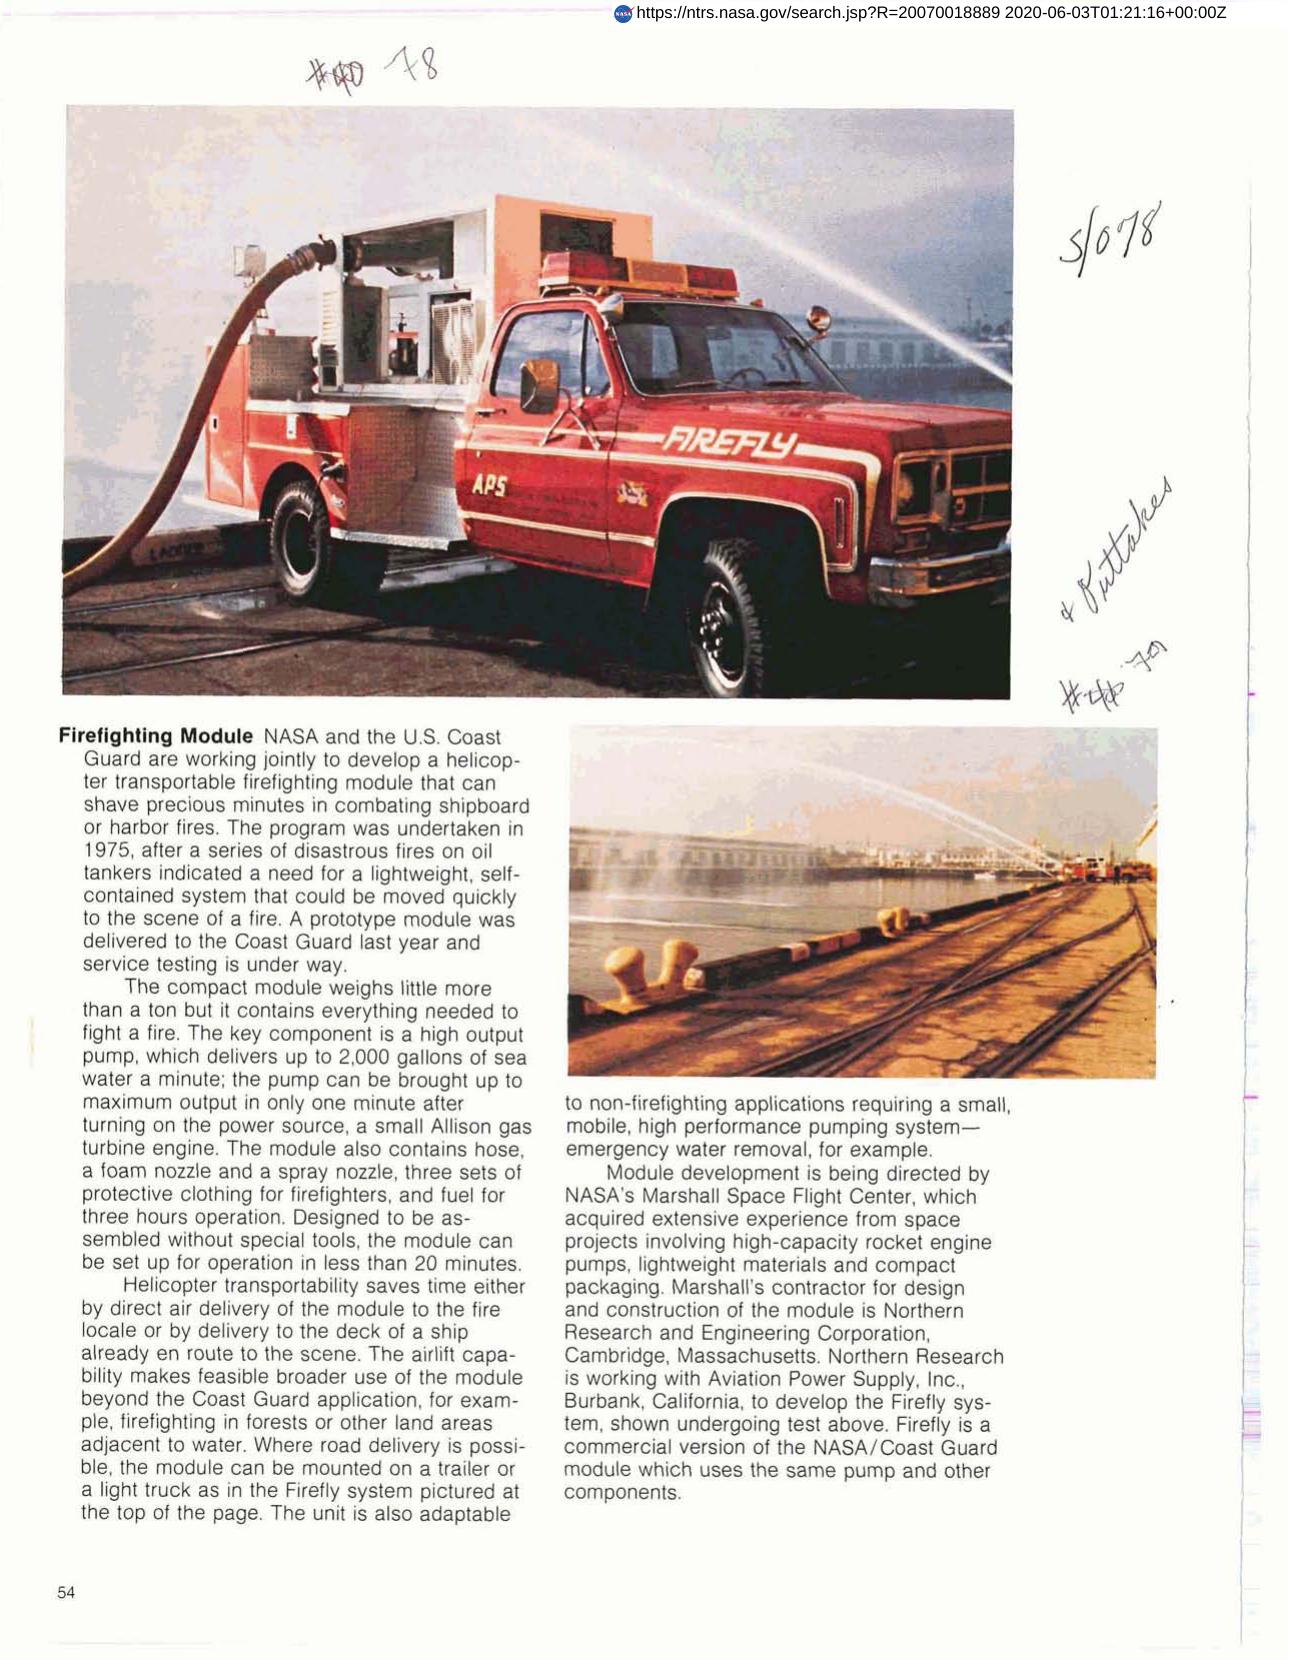 Firefighting Module (1978)